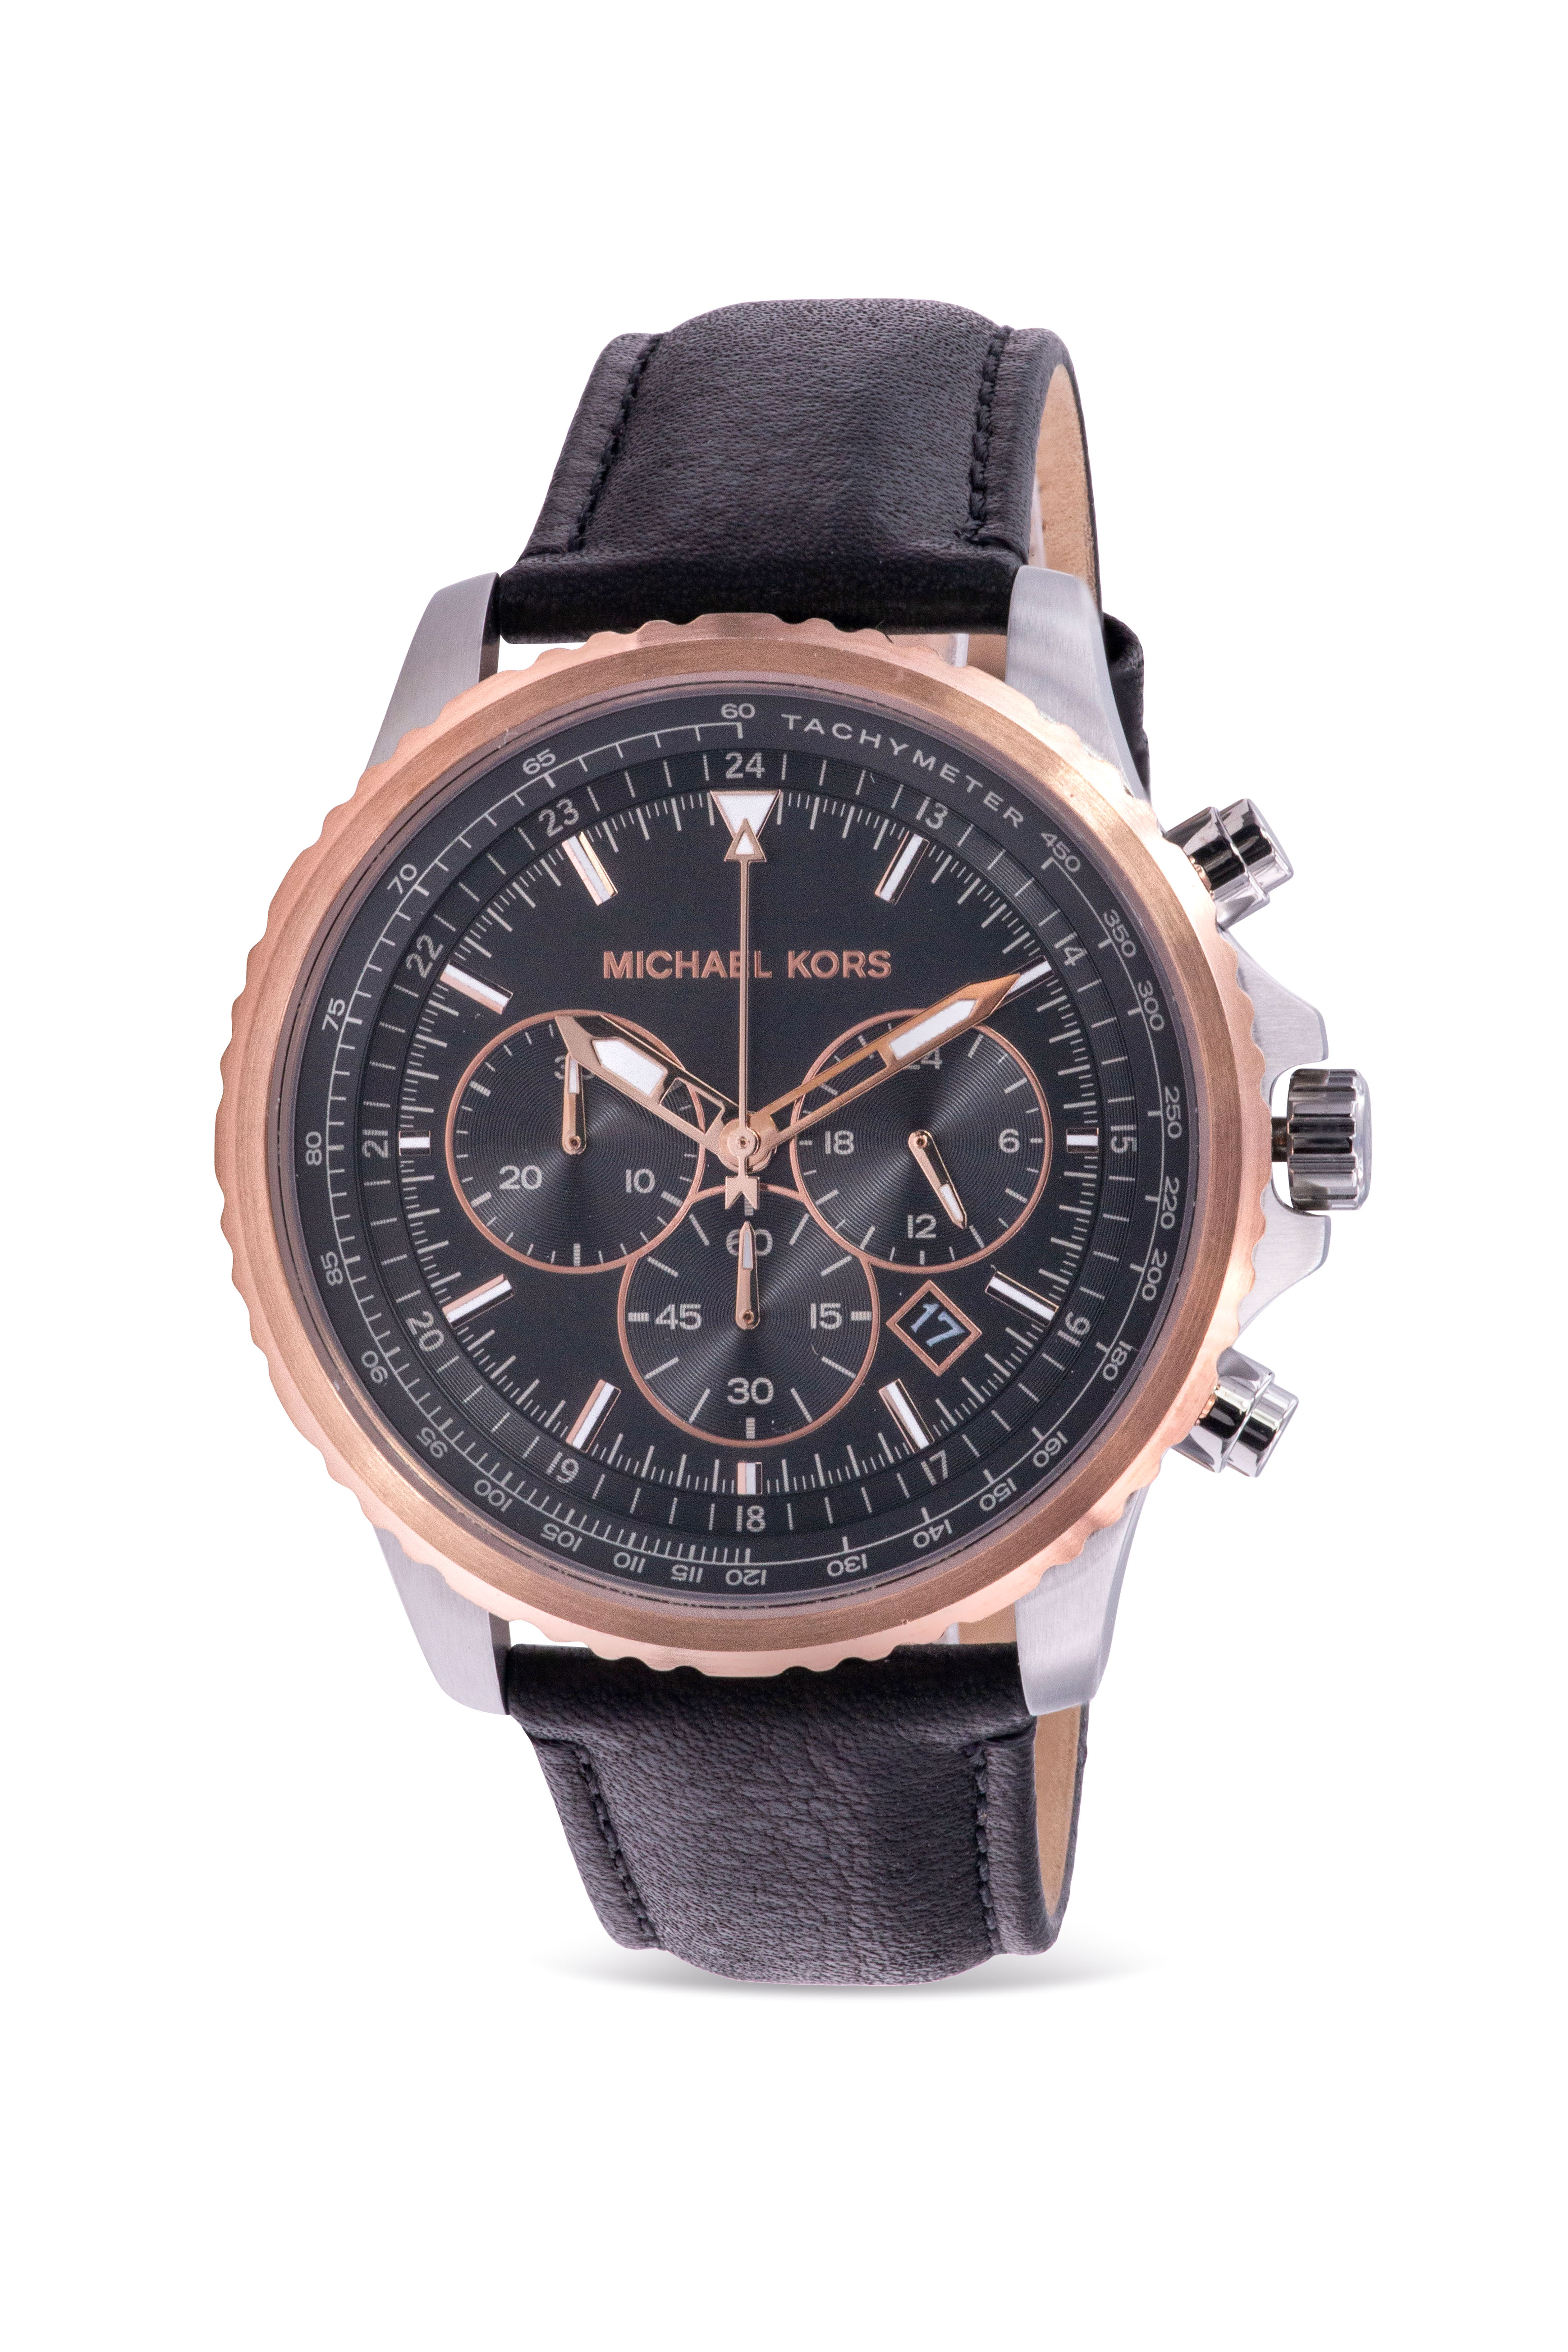 Michael Kors Cortlandt Chronograph Black Leather Mens Watch MK8905